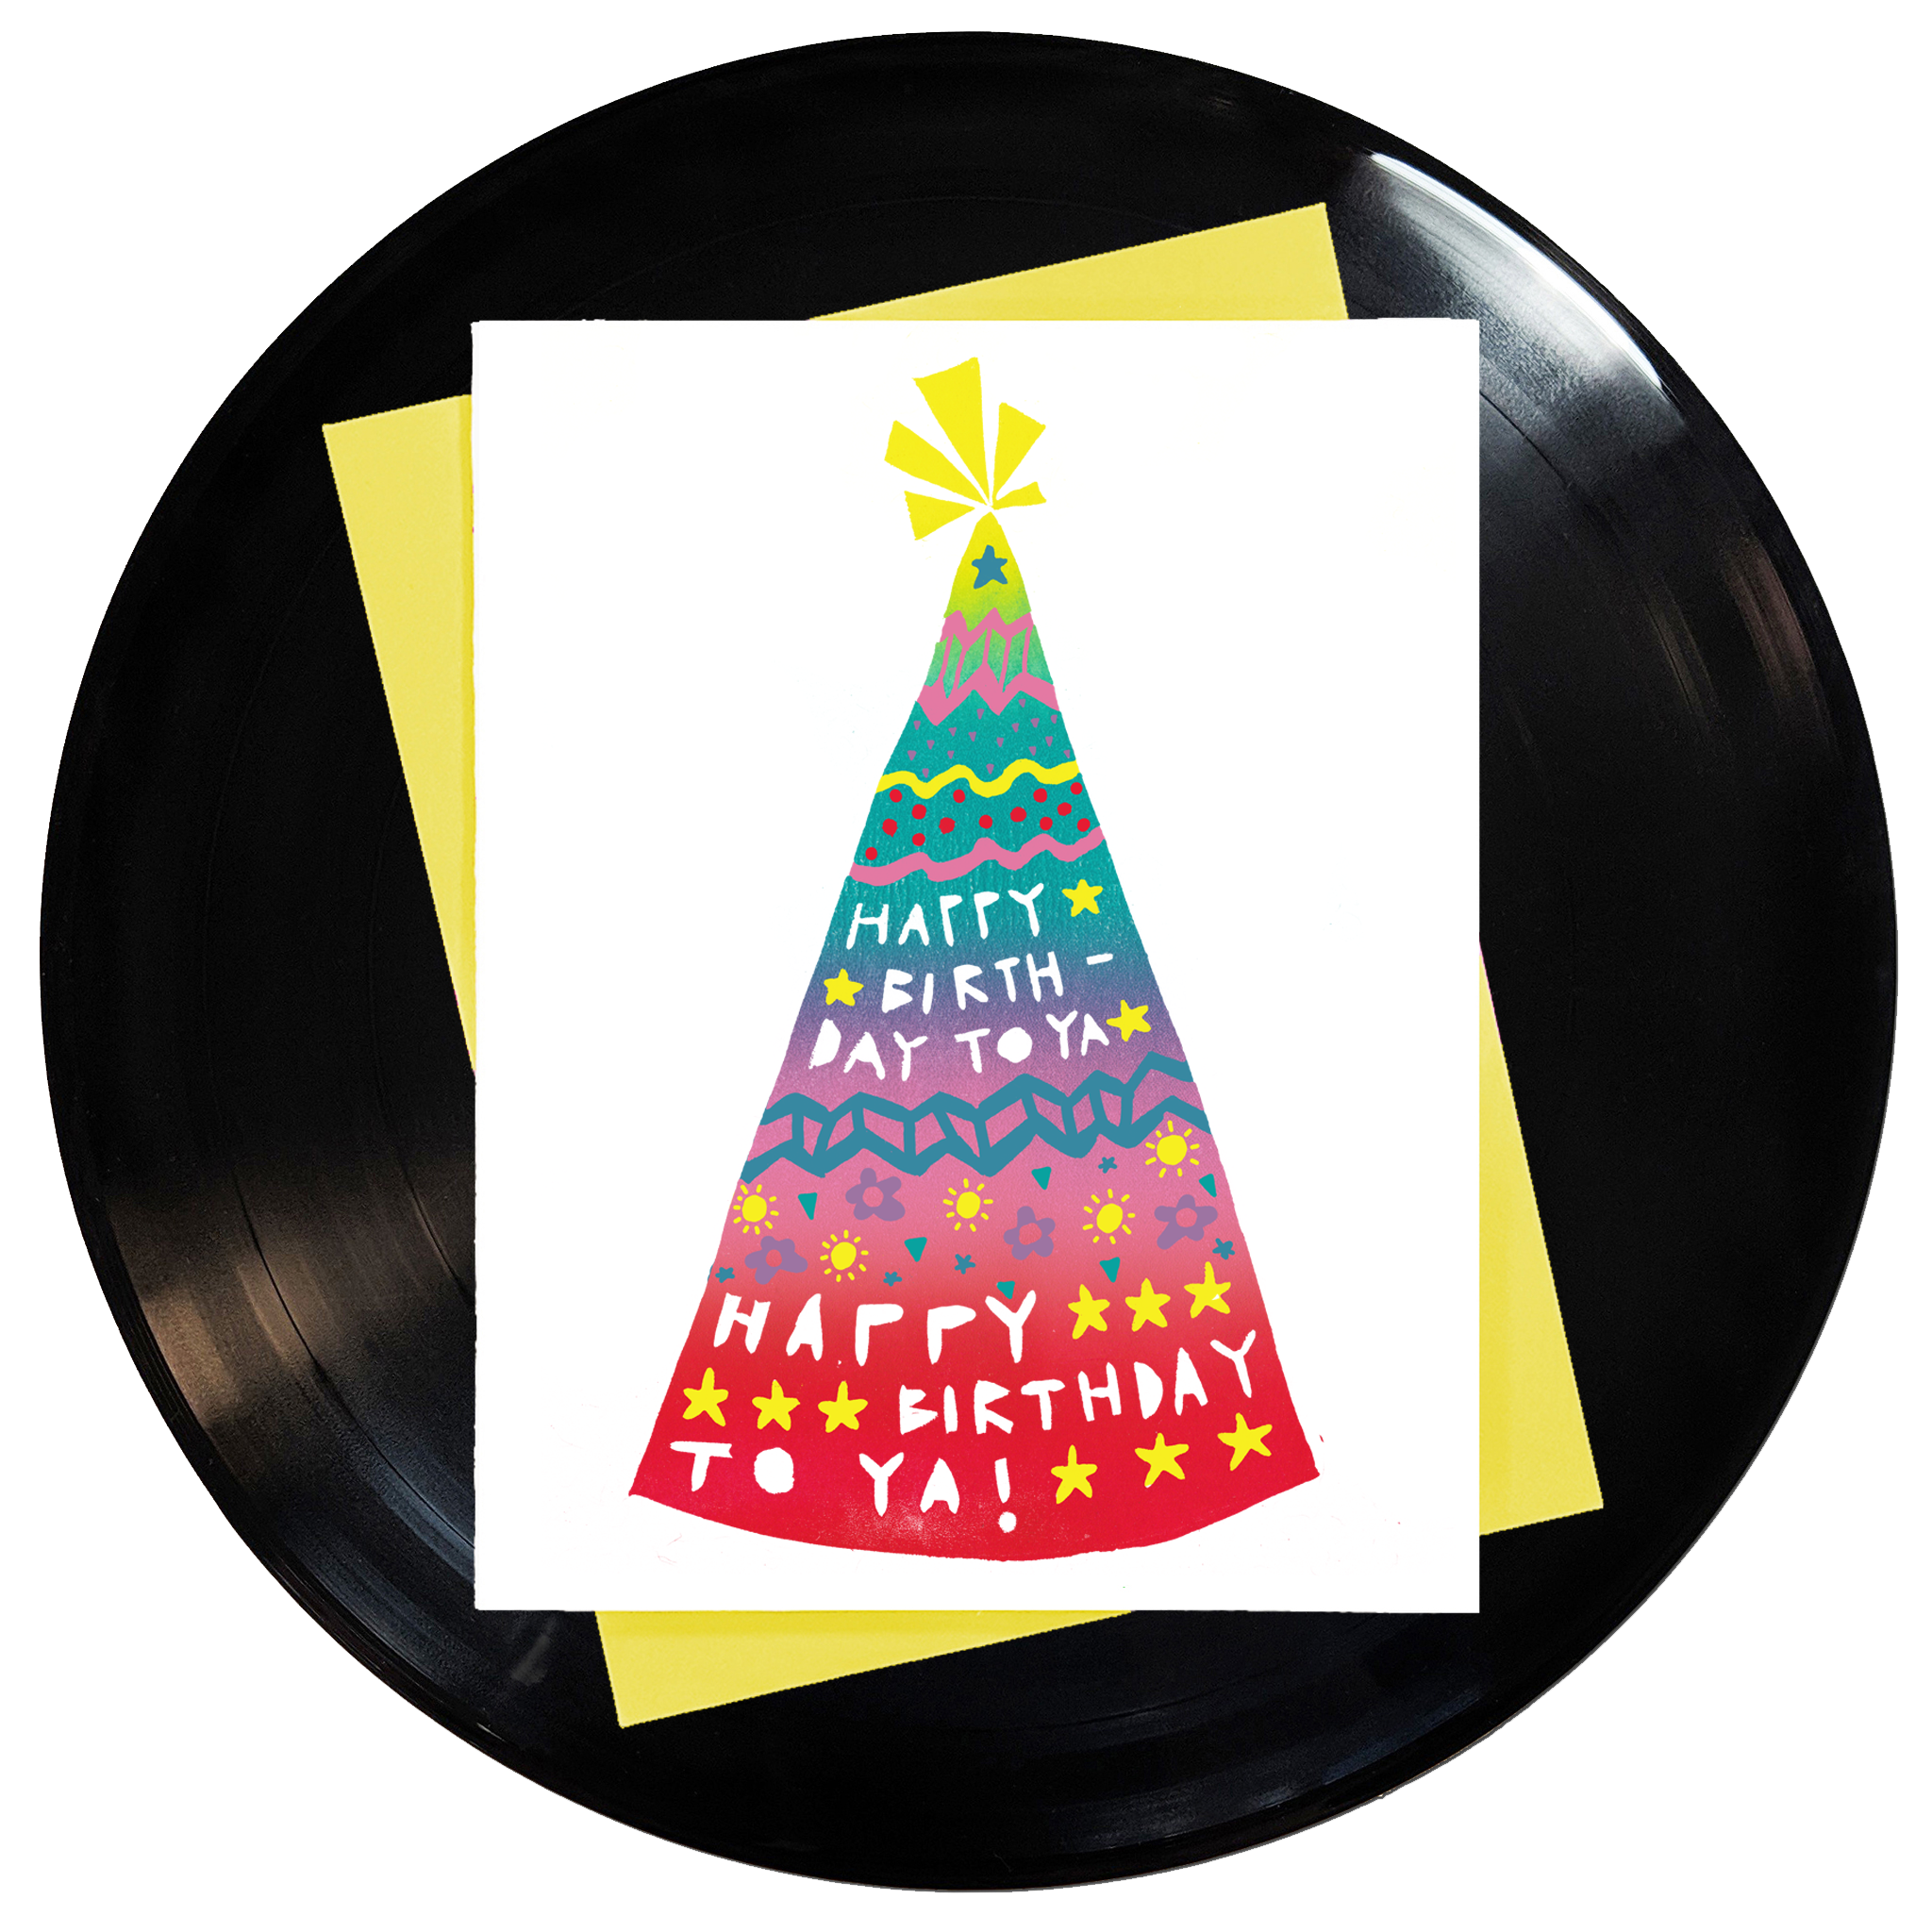 Happy Birthday Happy Birthday To Ya Greeting Card 6-Pack Inspired By Music